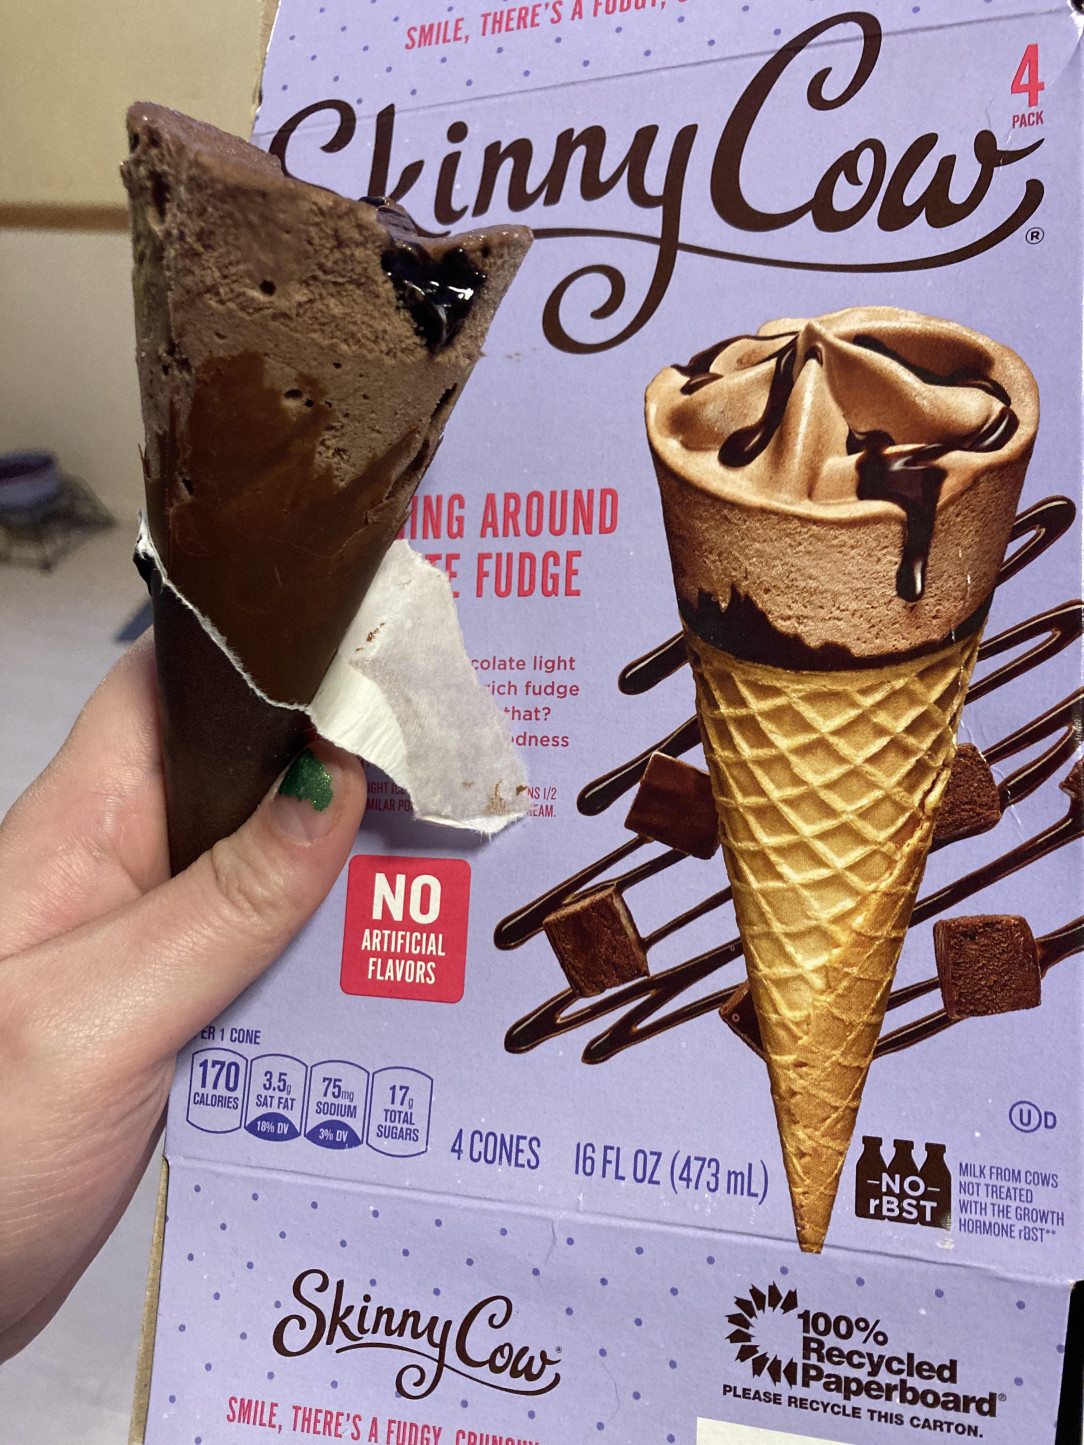 Found myself a coneless ice cream cone